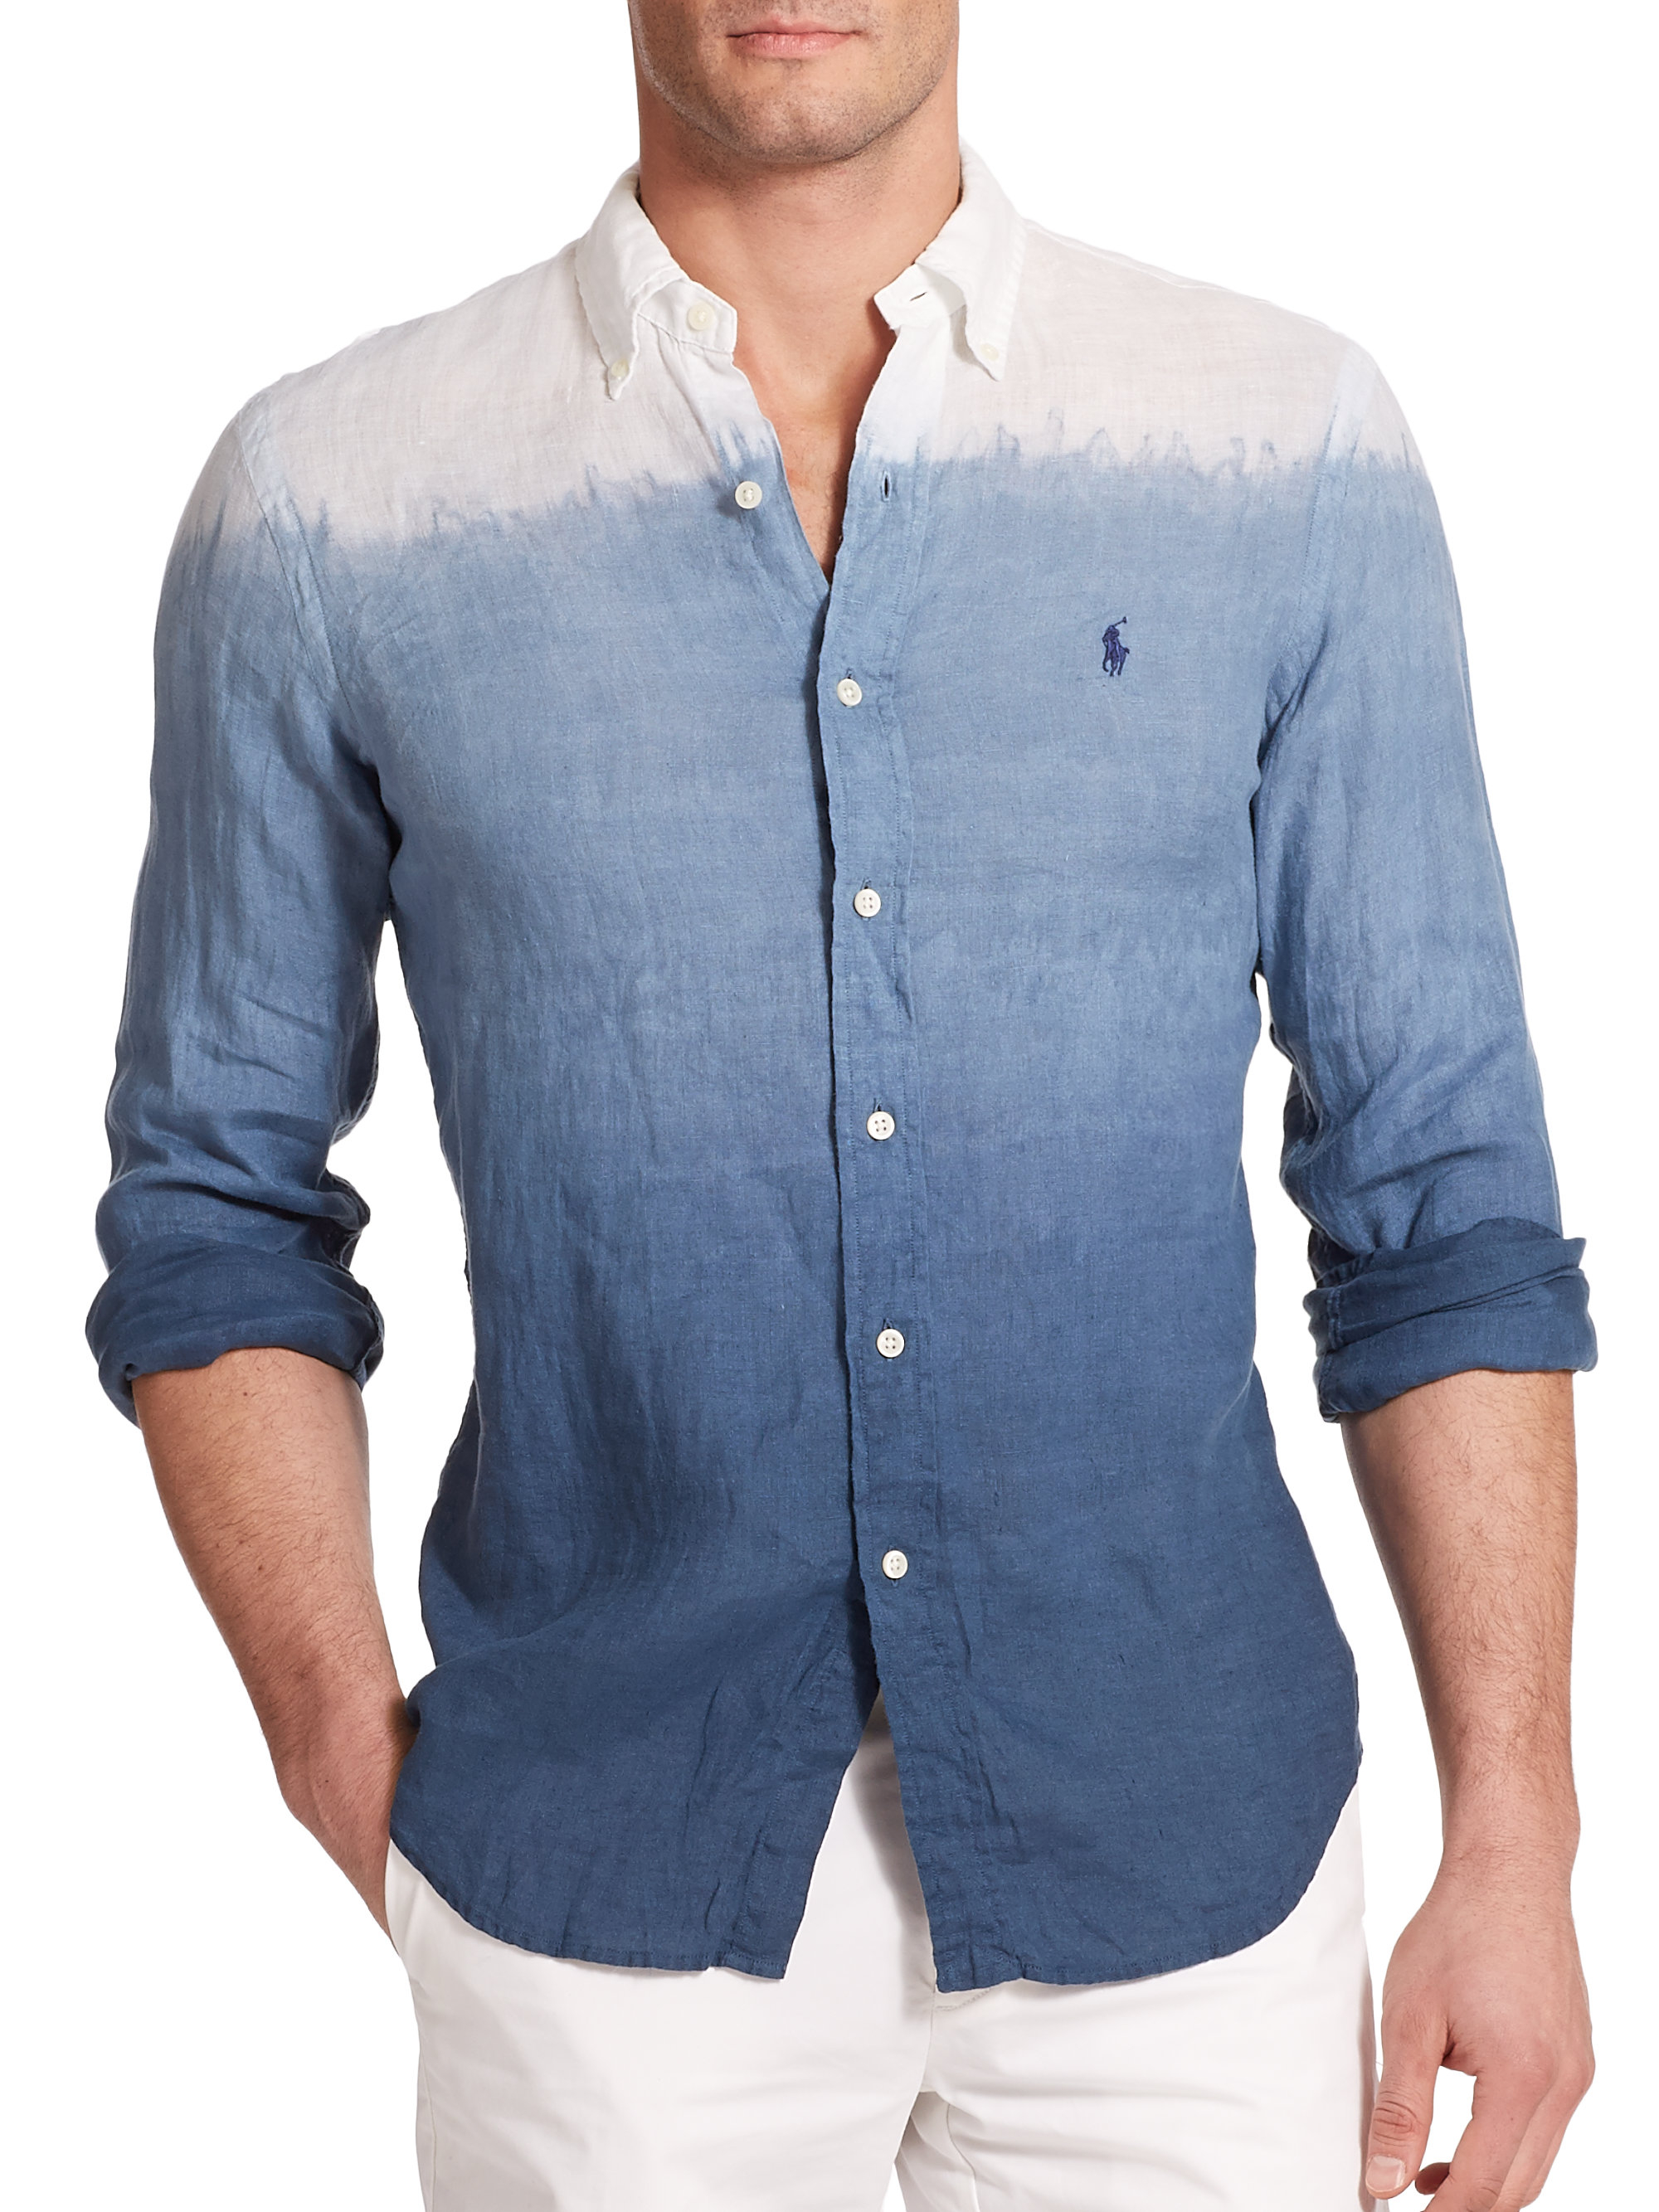 Polo Ralph Lauren Dip-Dyed Linen Sportshirt in Blue for Men - Lyst